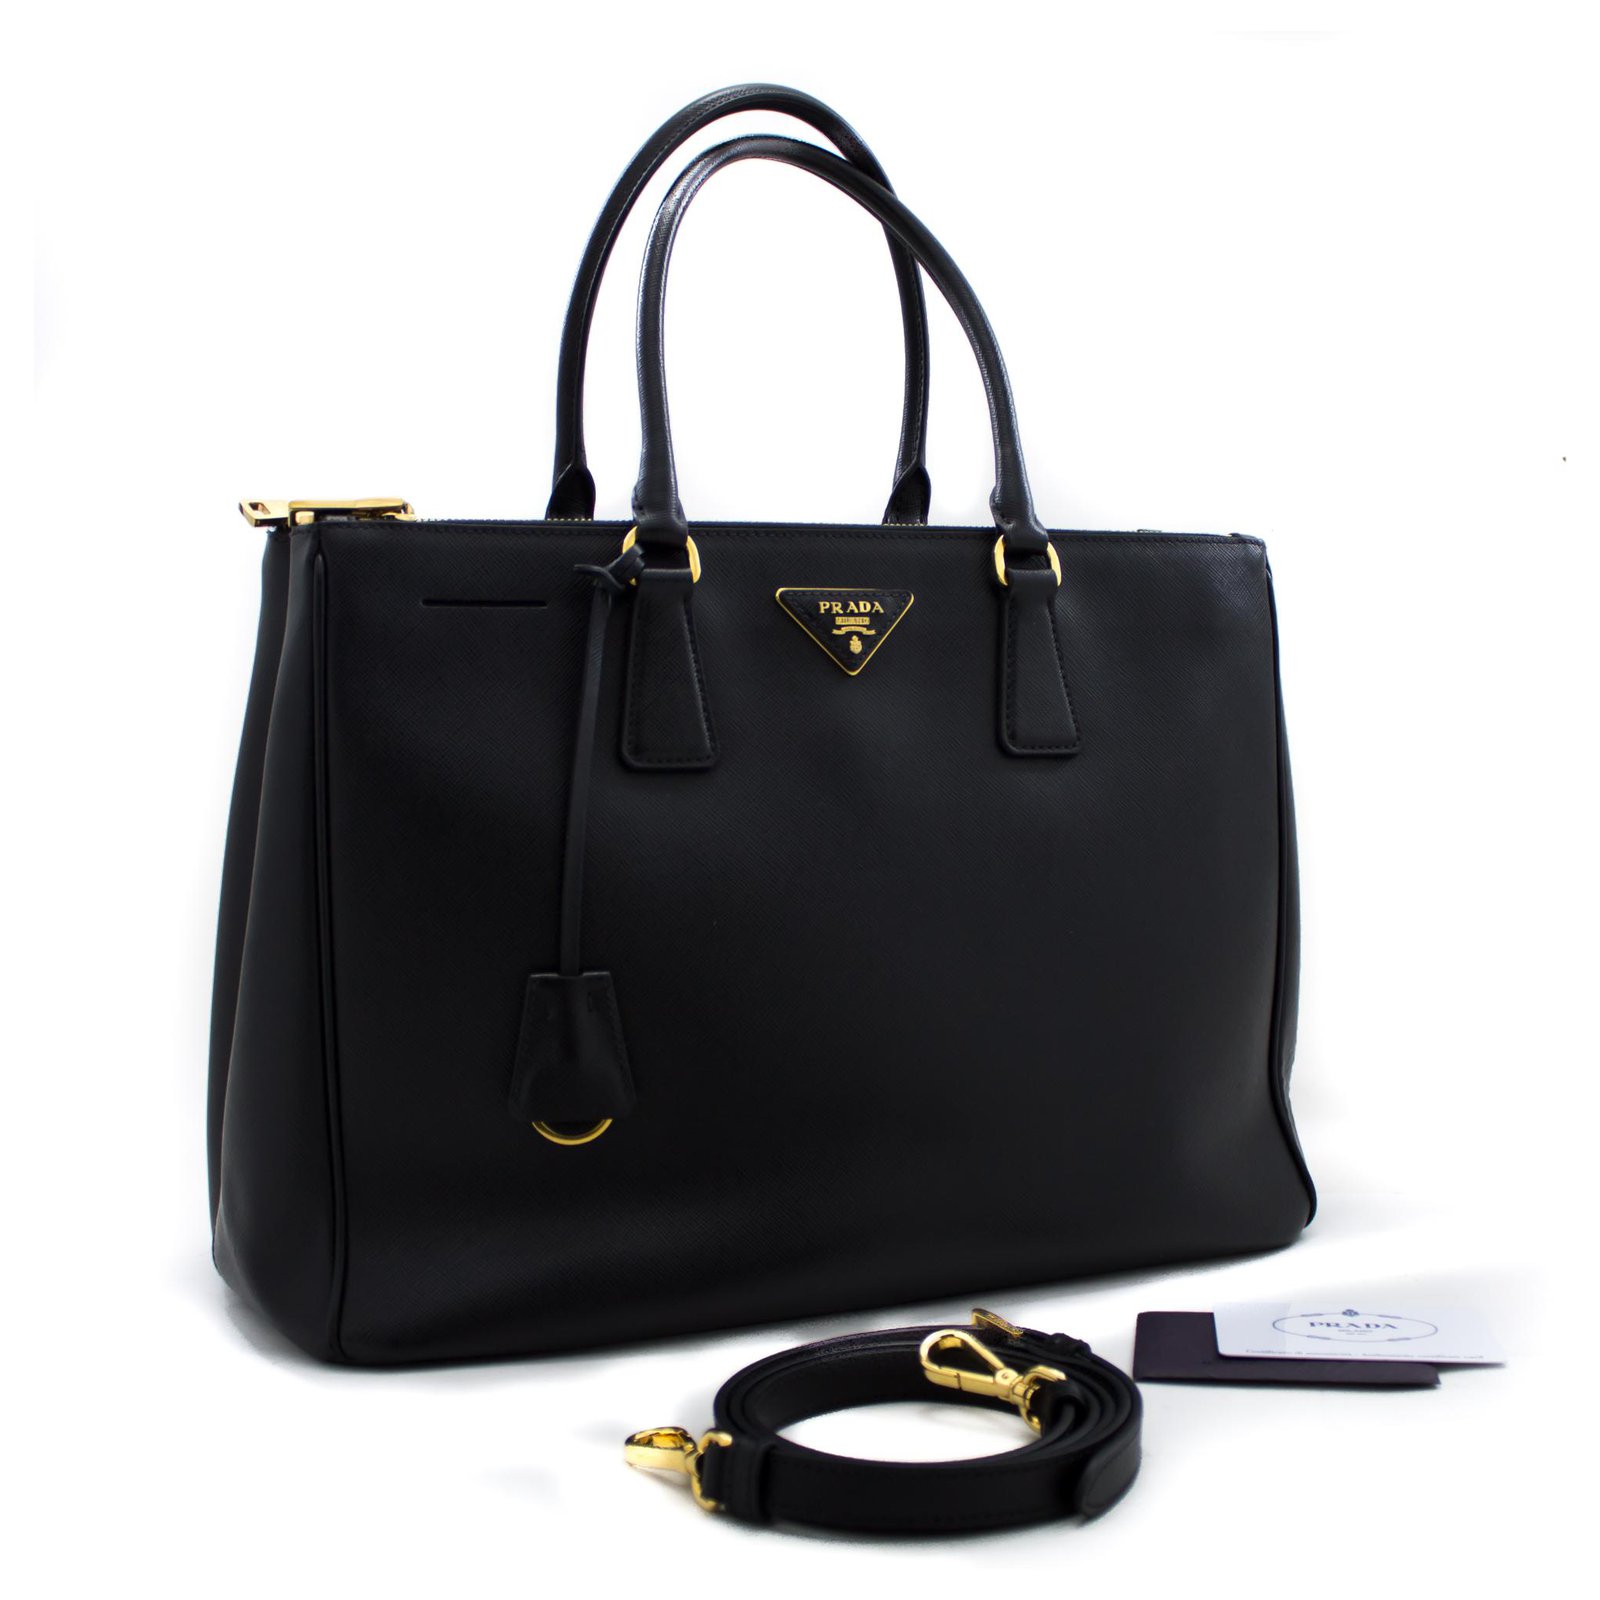 prada black leather purse